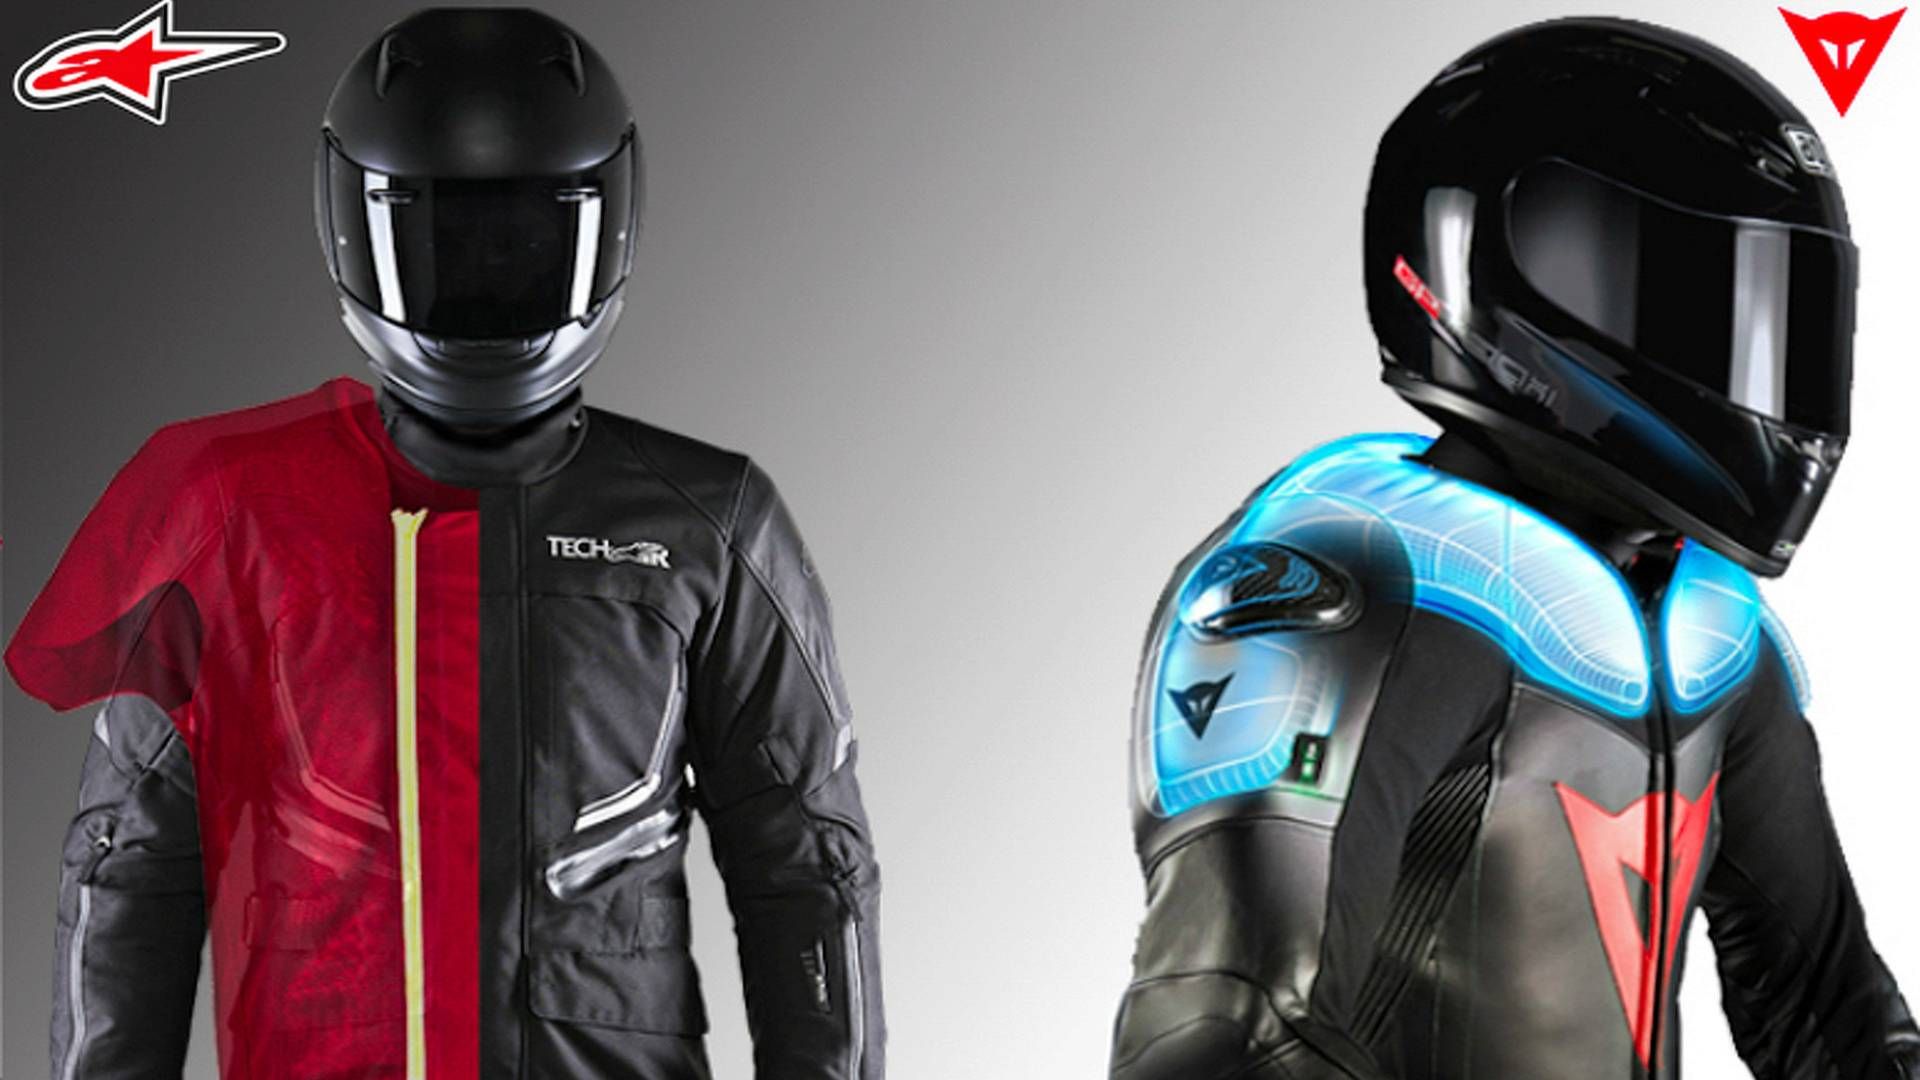 Alpinestars Airbag Suits Motorcycle Race MotoGP